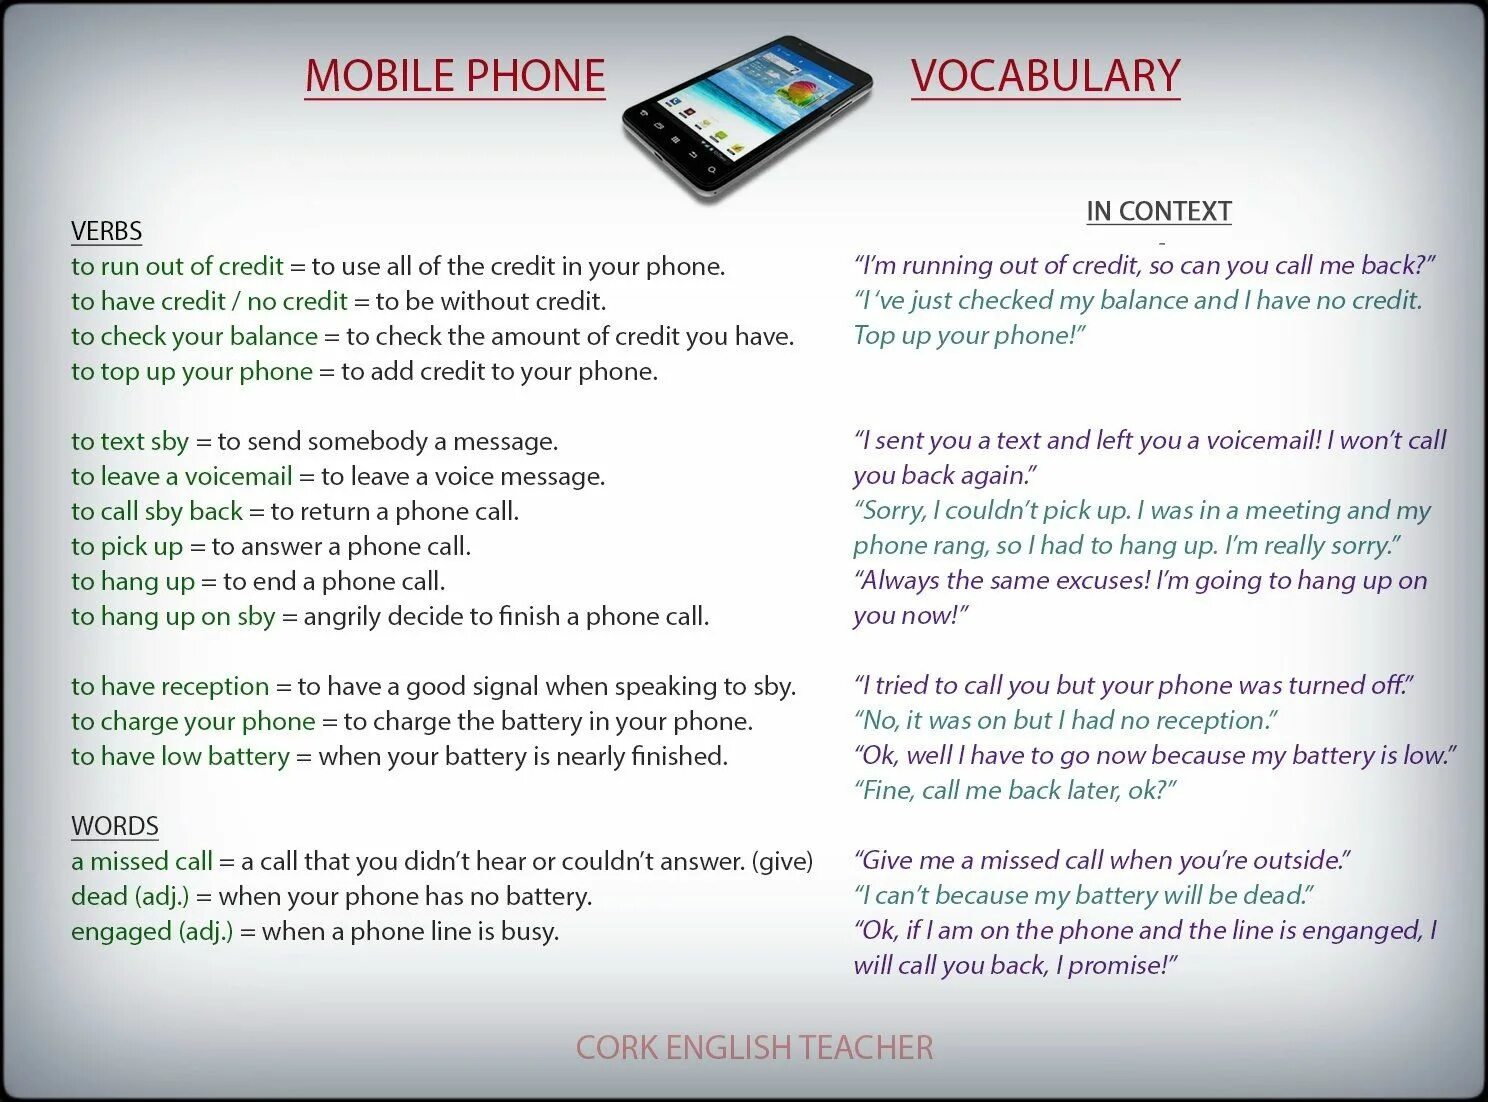 Check english vocabulary. Mobile Phone Vocabulary. Вокабуляр mobile Phone. Phone Calls Vocabulary. Мобильный телефон по английскому.